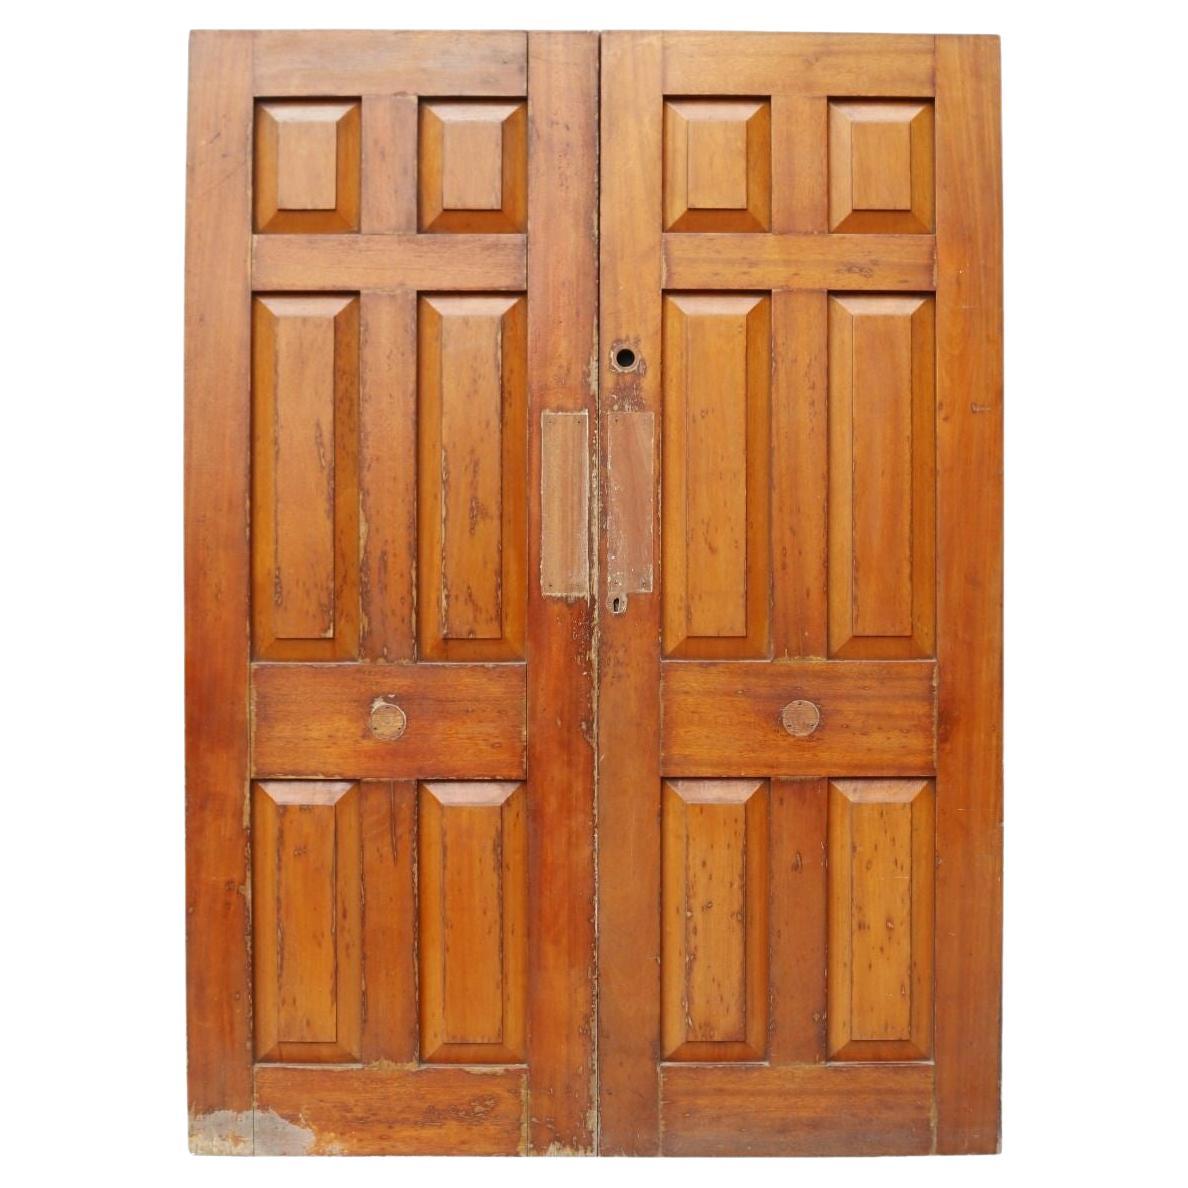 Reclaimed Hardwood Exterior Doors (Pair)